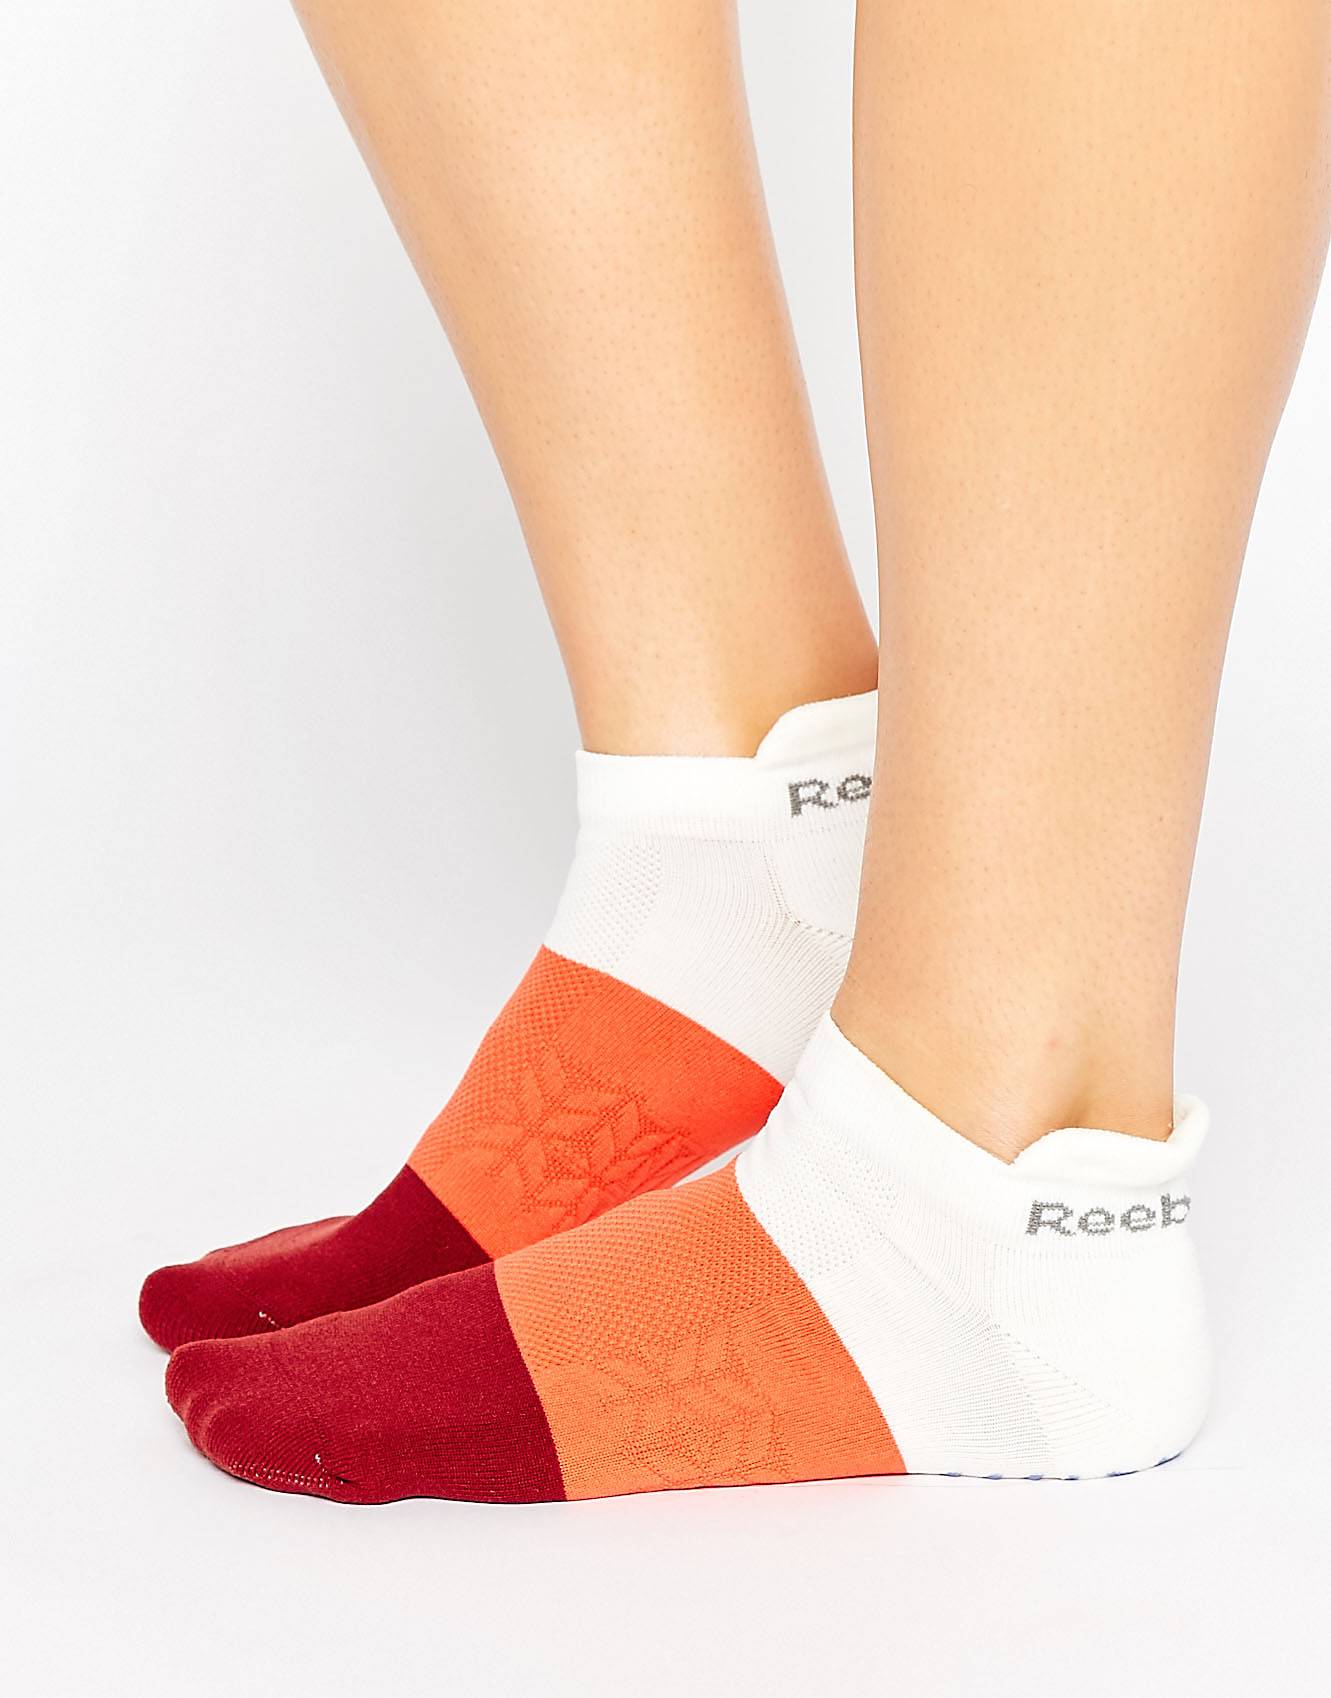 Носки рибок. Носки короткие Rebook. Носки Reebok женские. Reebok Quarter Cut носки. Оранжевые носки Reebok.